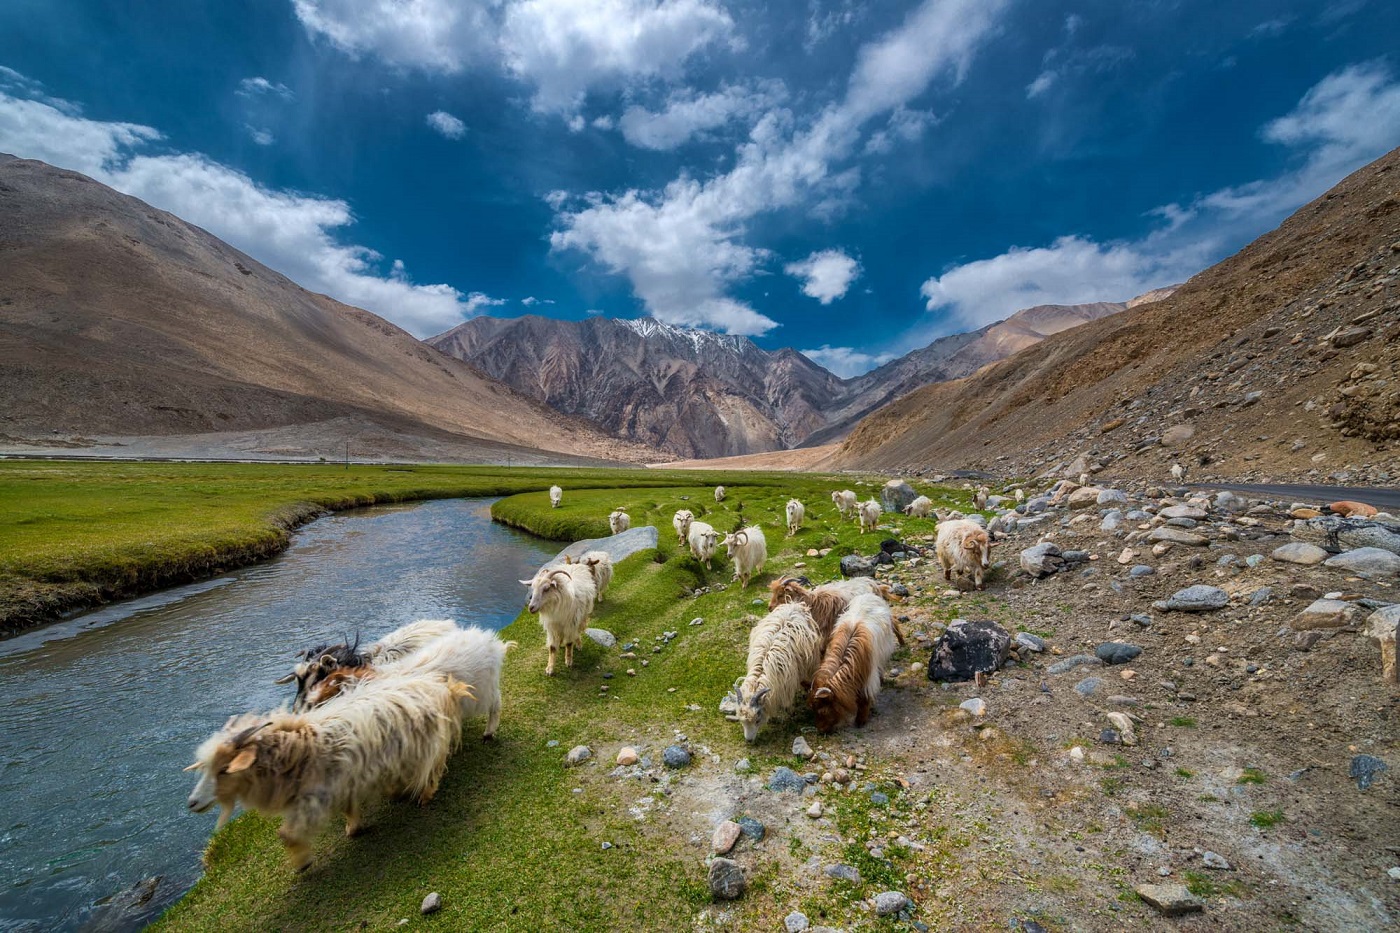 Leh Ladakh in June